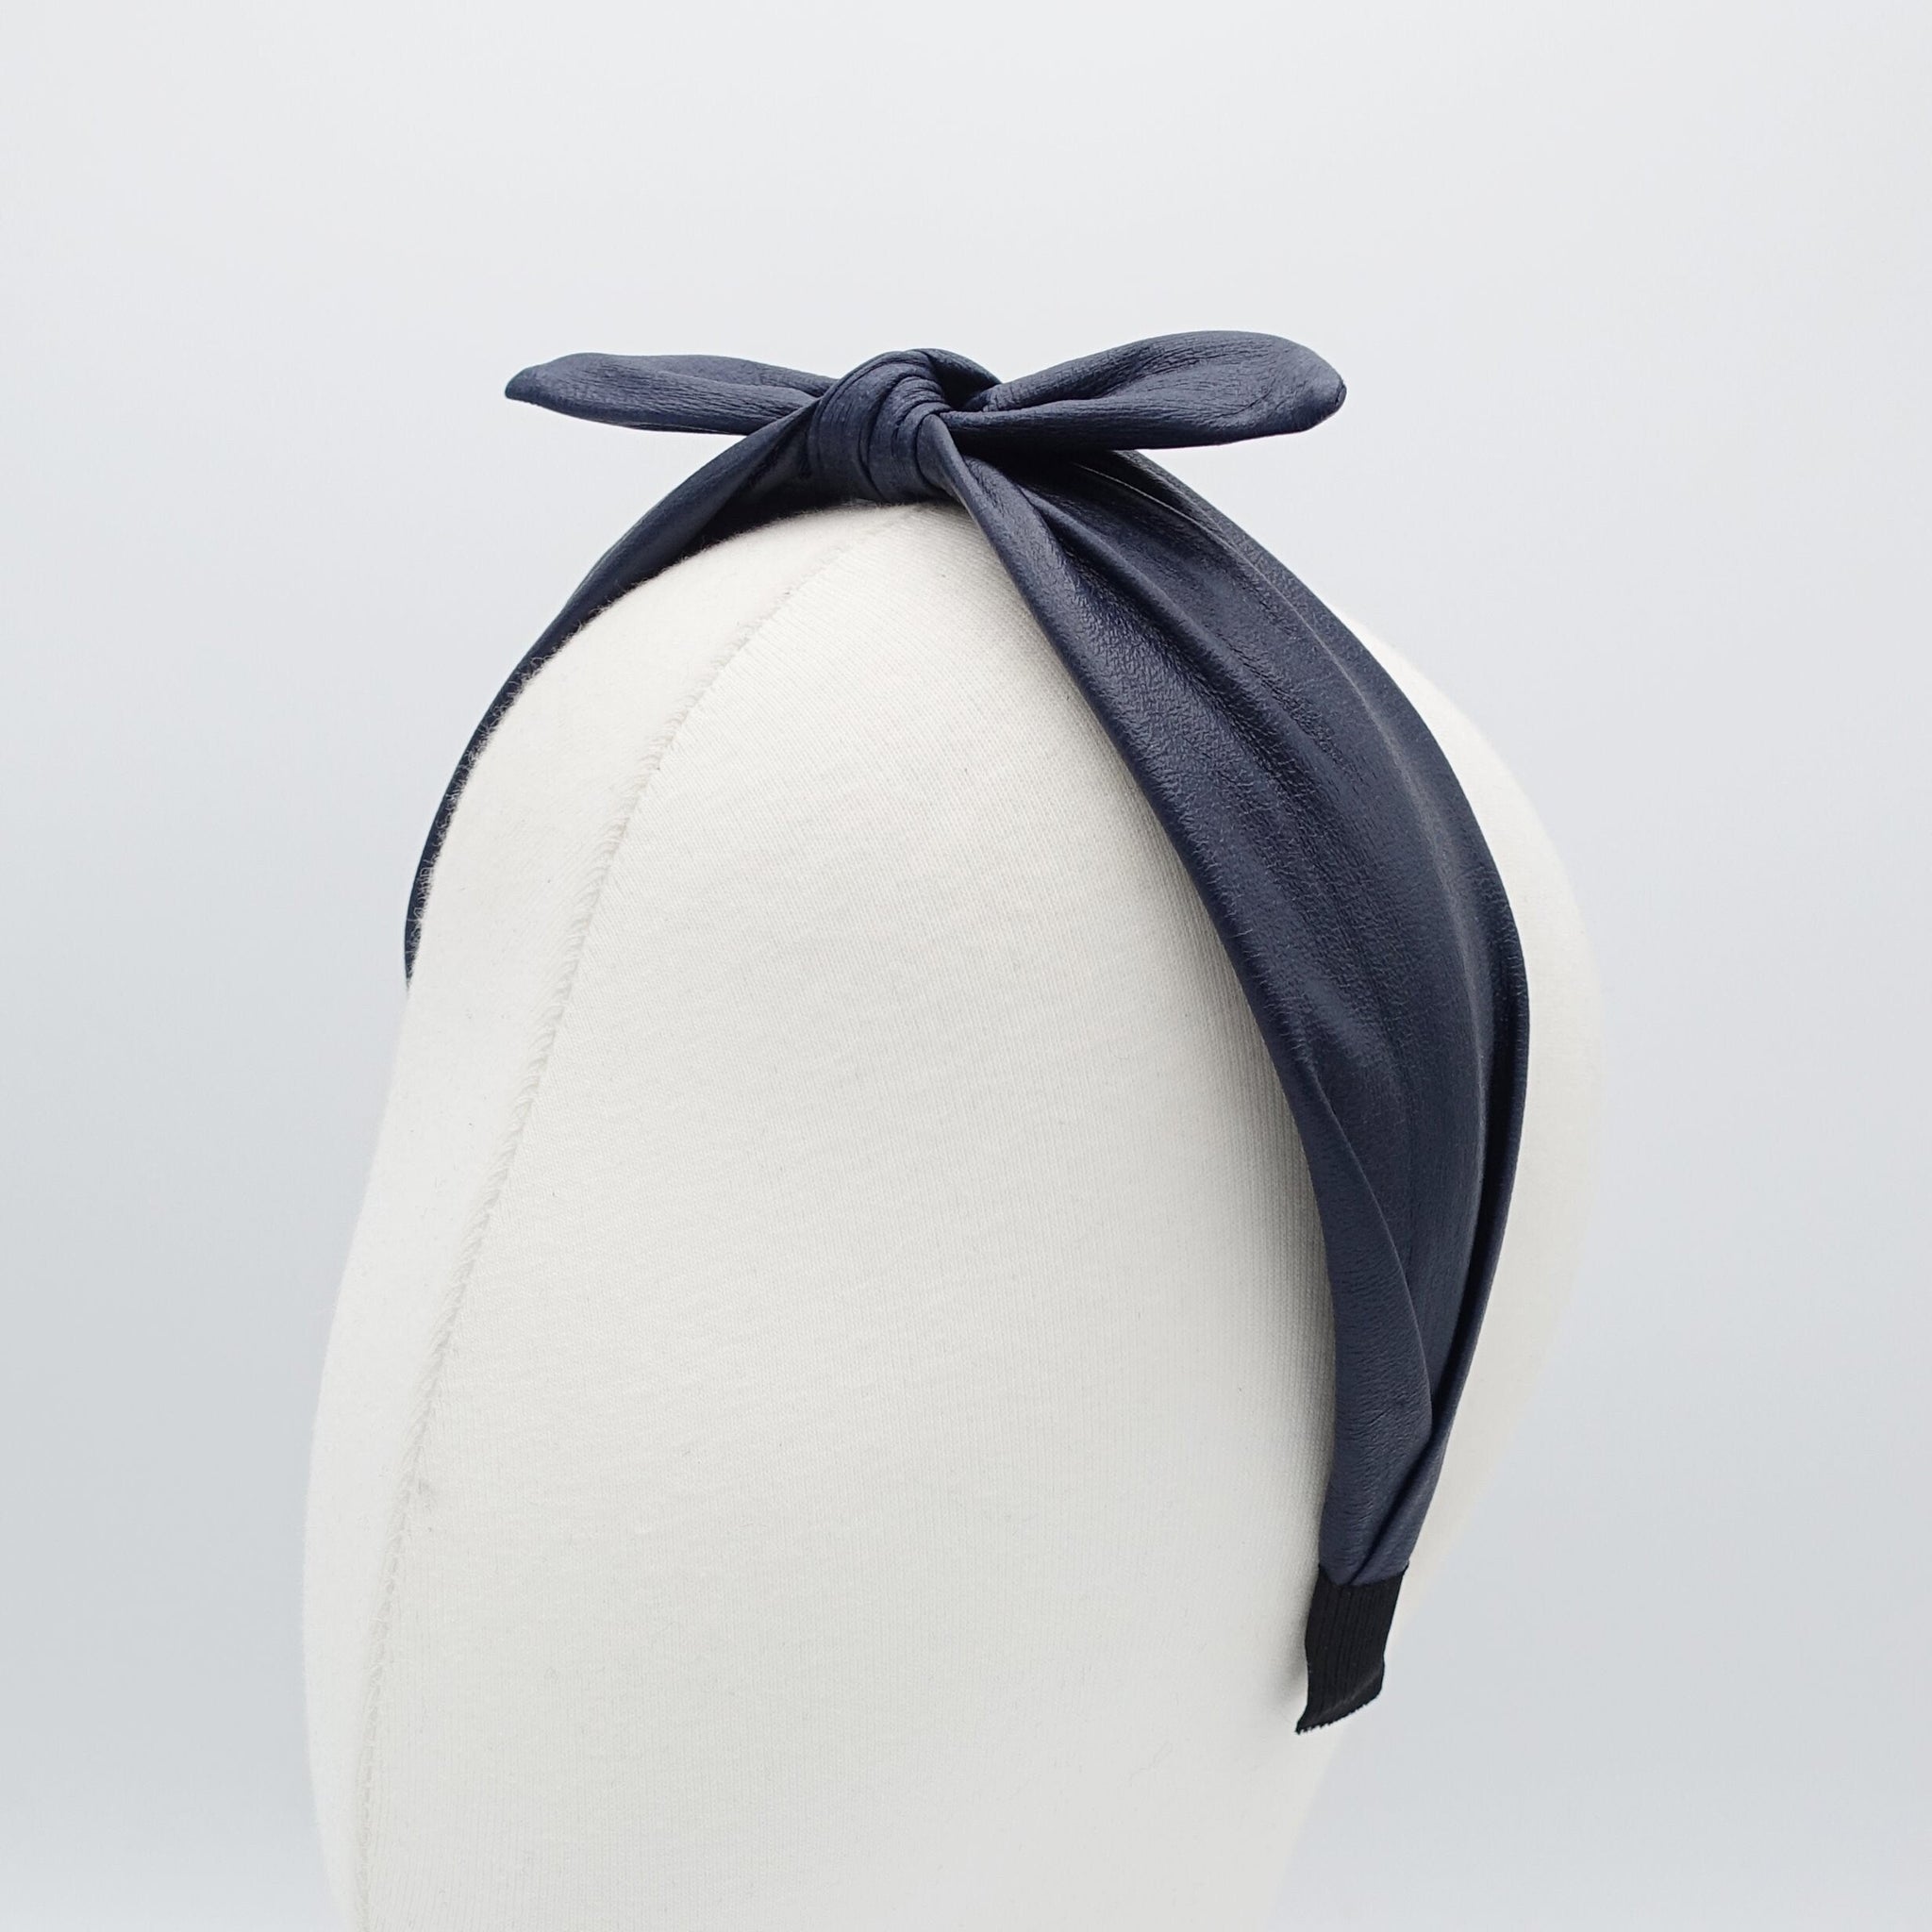 veryshine.com Headband wired bow knot headband faux leather hairband women hair accessories